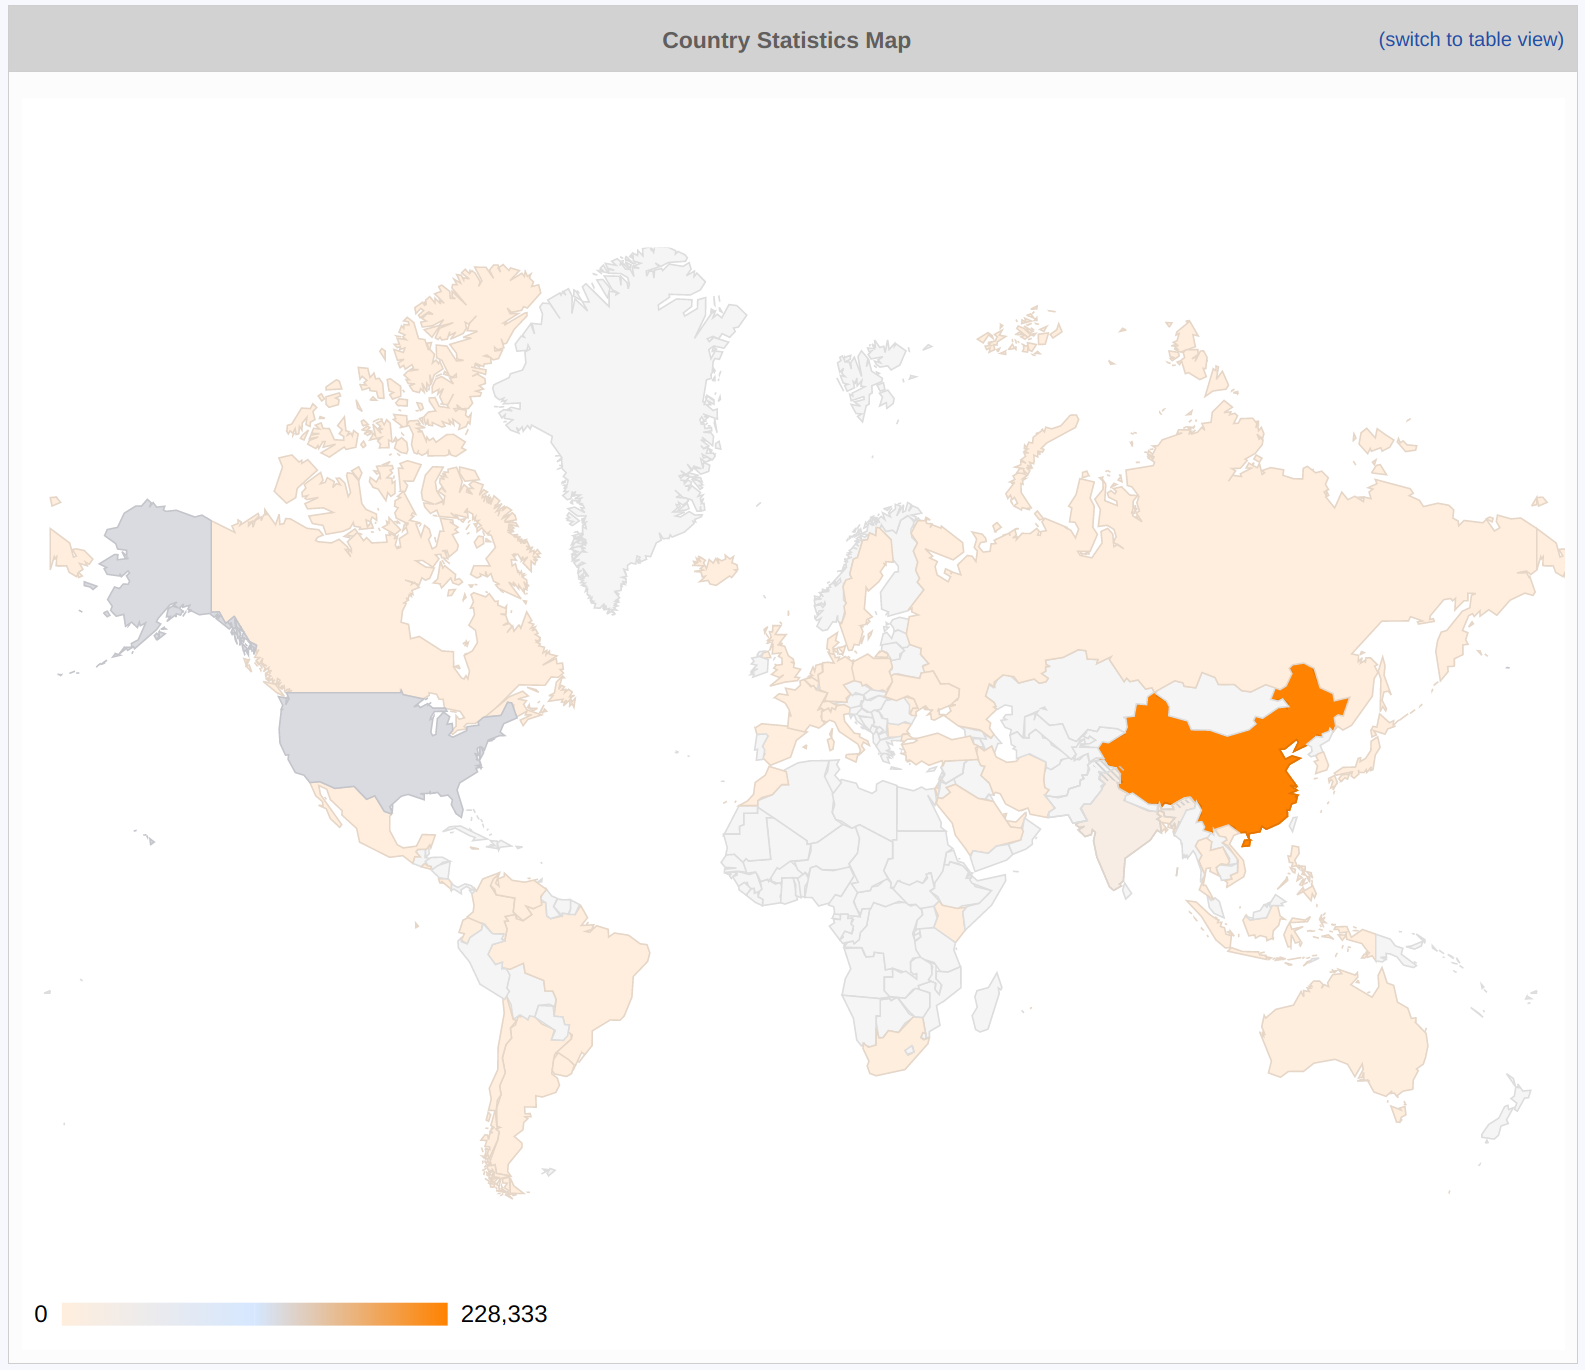 figure screenshots/report-country-statistics-map.png